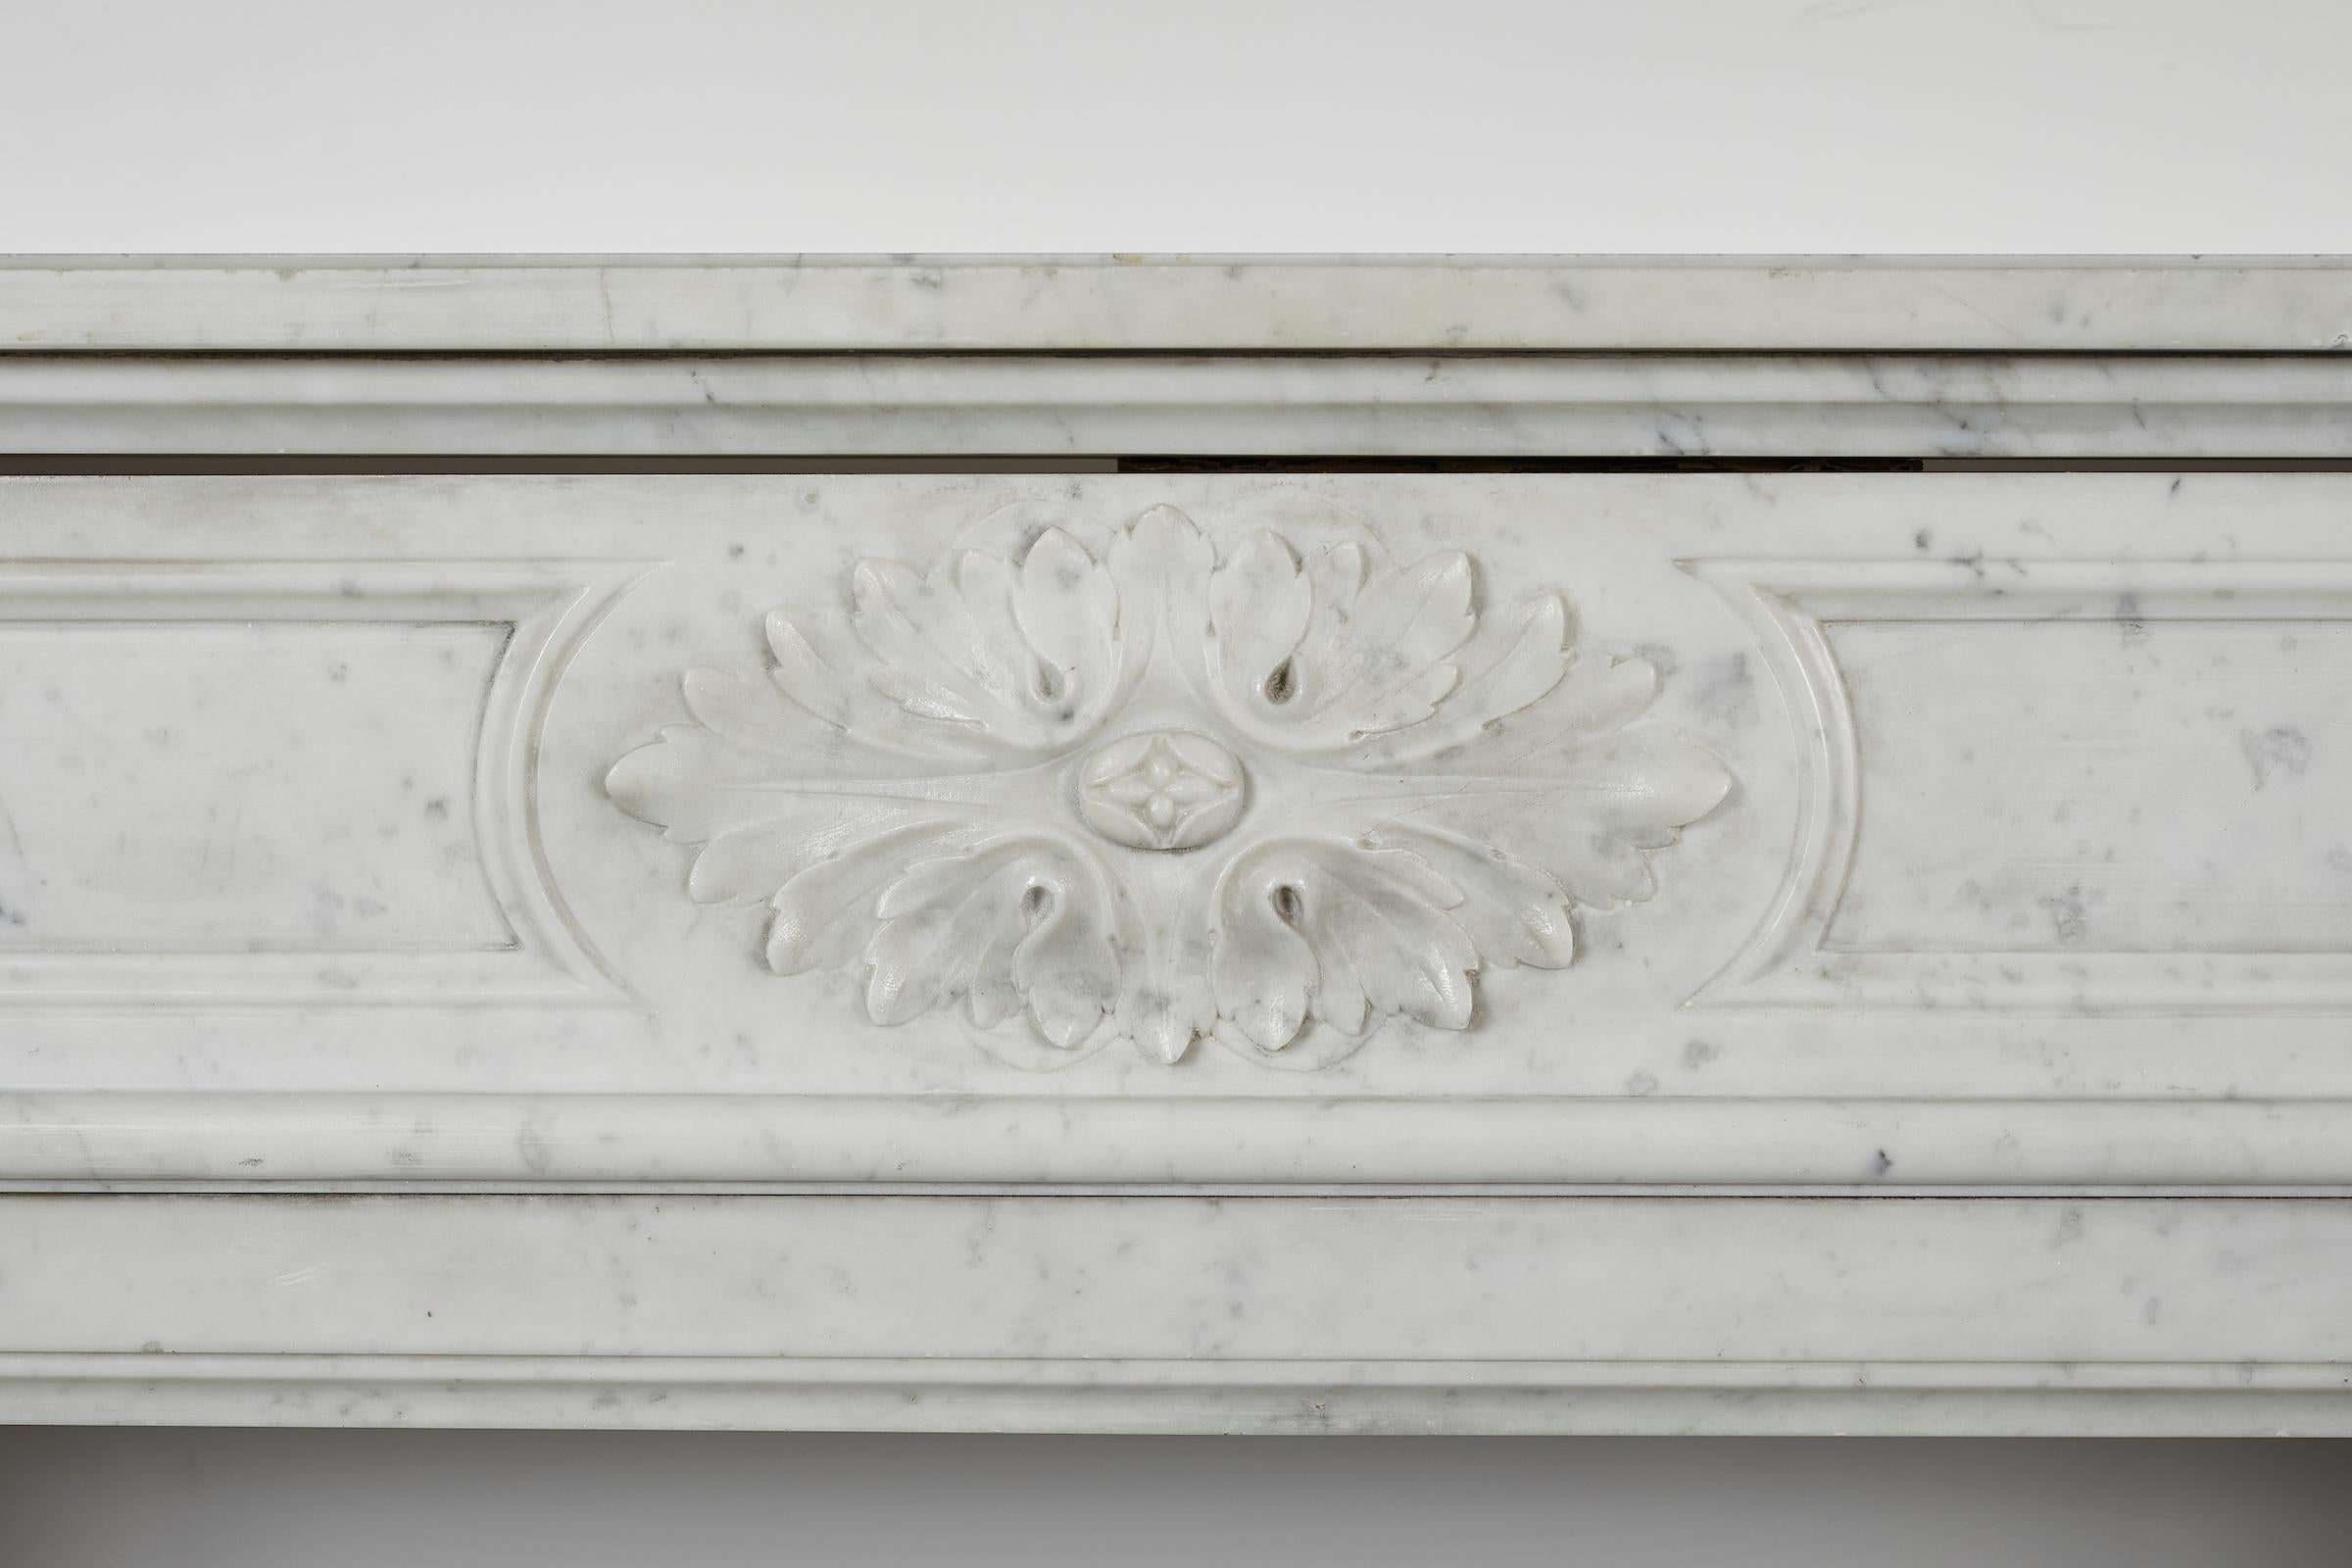 Louis XVI style white Carrara marble mantel with semi columns and floral motifs.
Interior dimensions H 33.5 x W 43.25.
 